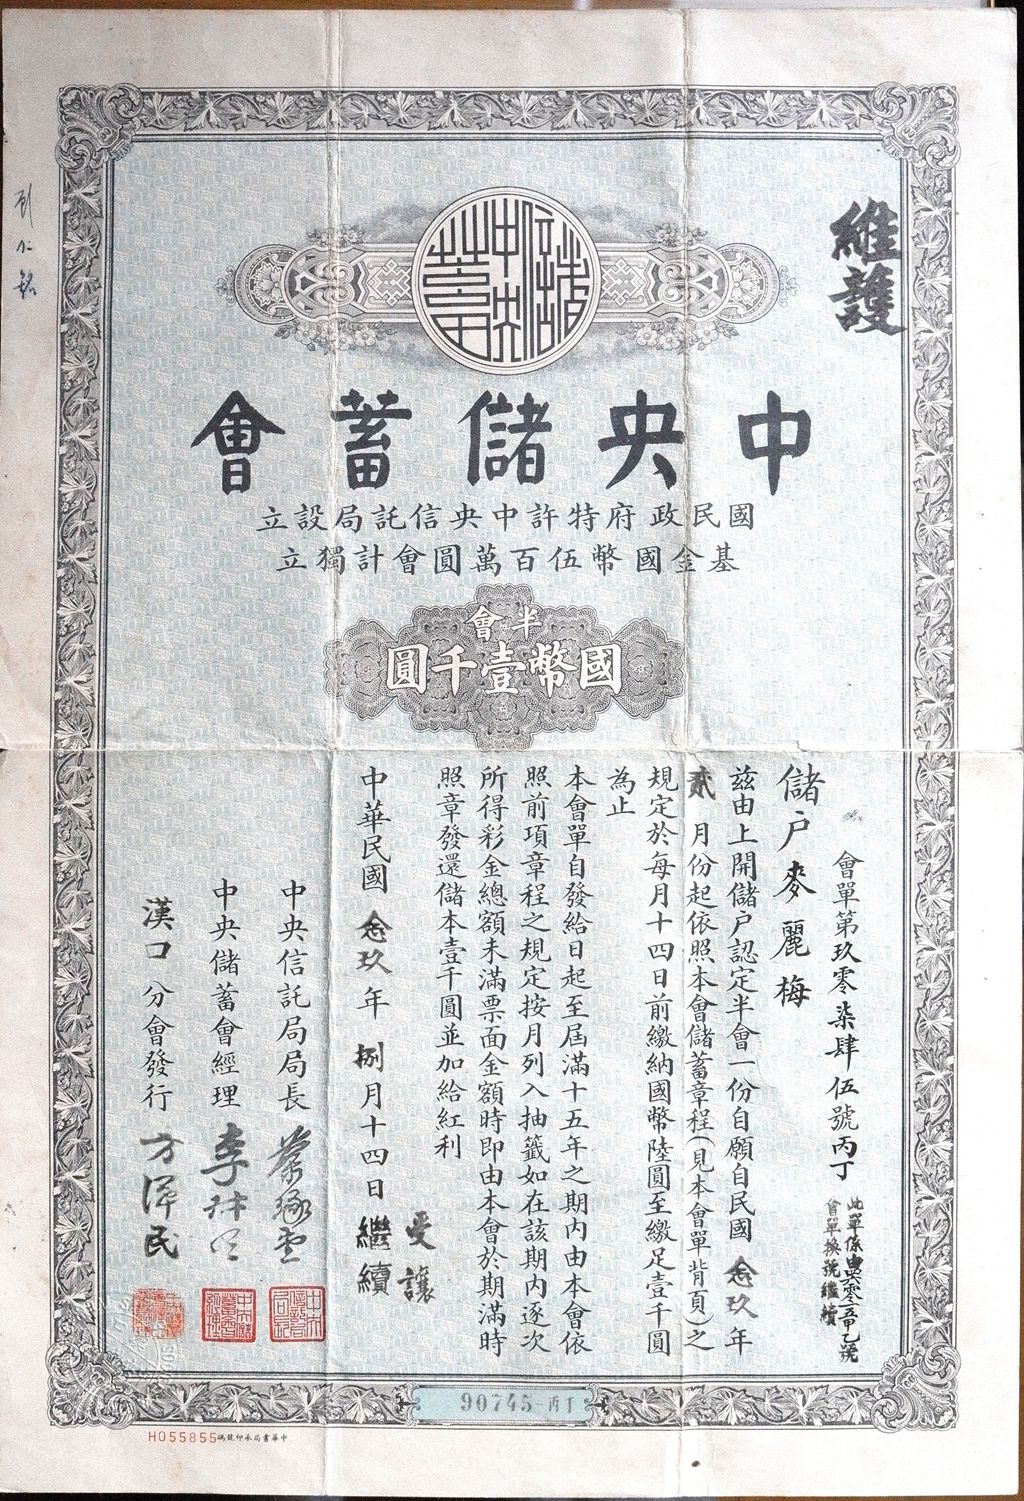 B2732, China Central Savings Society, 1000 Dollars (1/2 Lot) Lottery Bond Loan, 1940